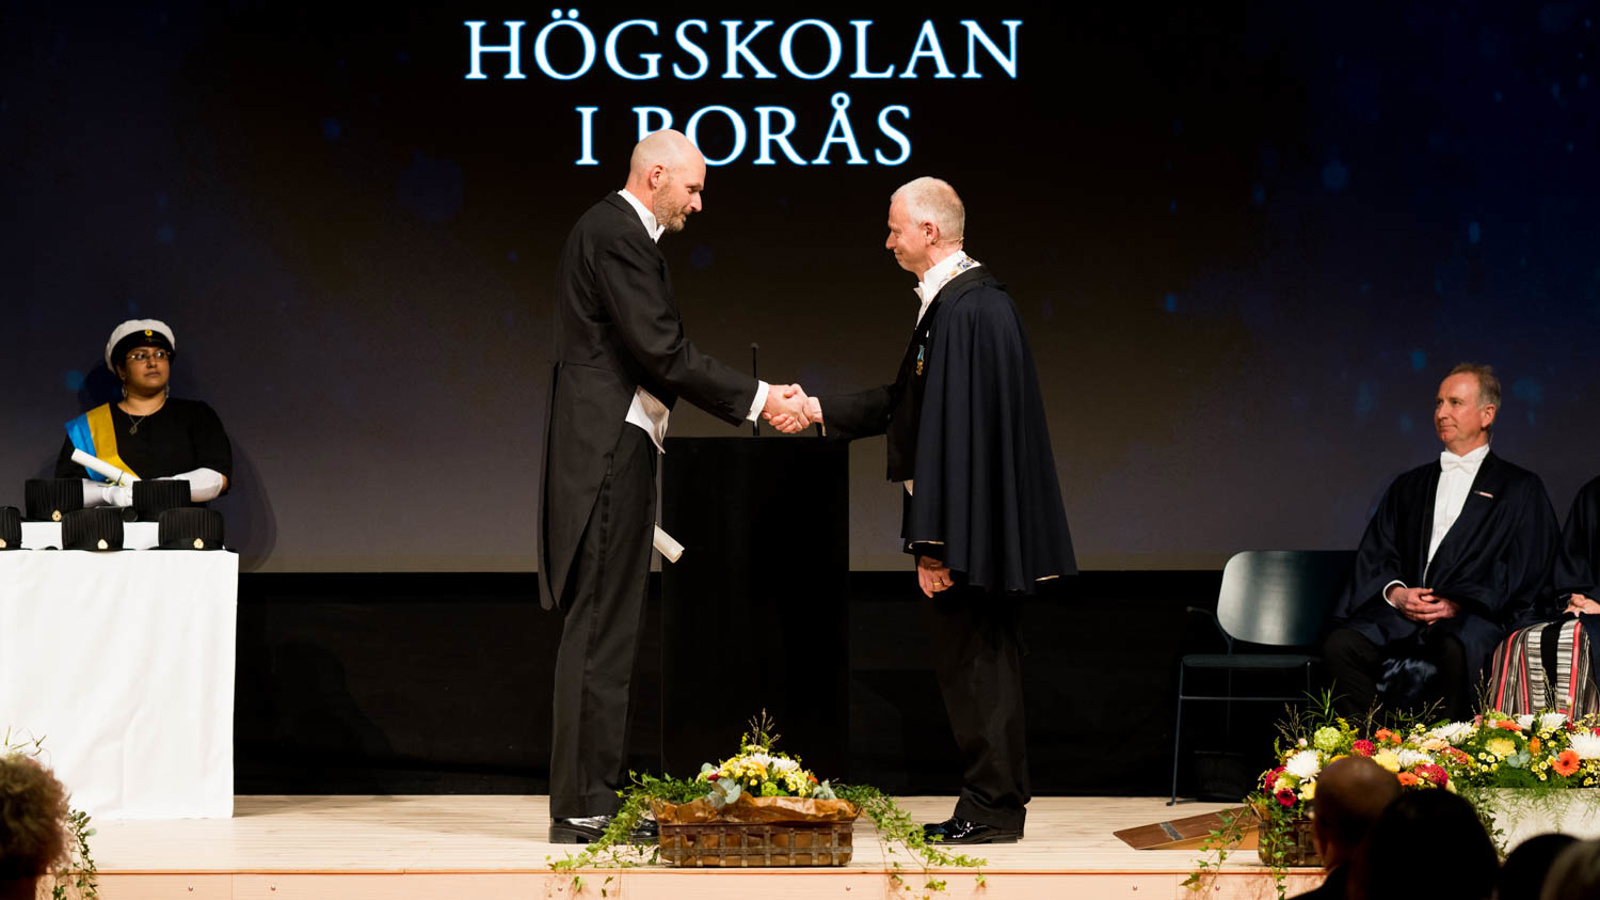 Professor Magnus Andersson Hagiwara is shaking hands with Vice Chancellor Mats Tinnsten